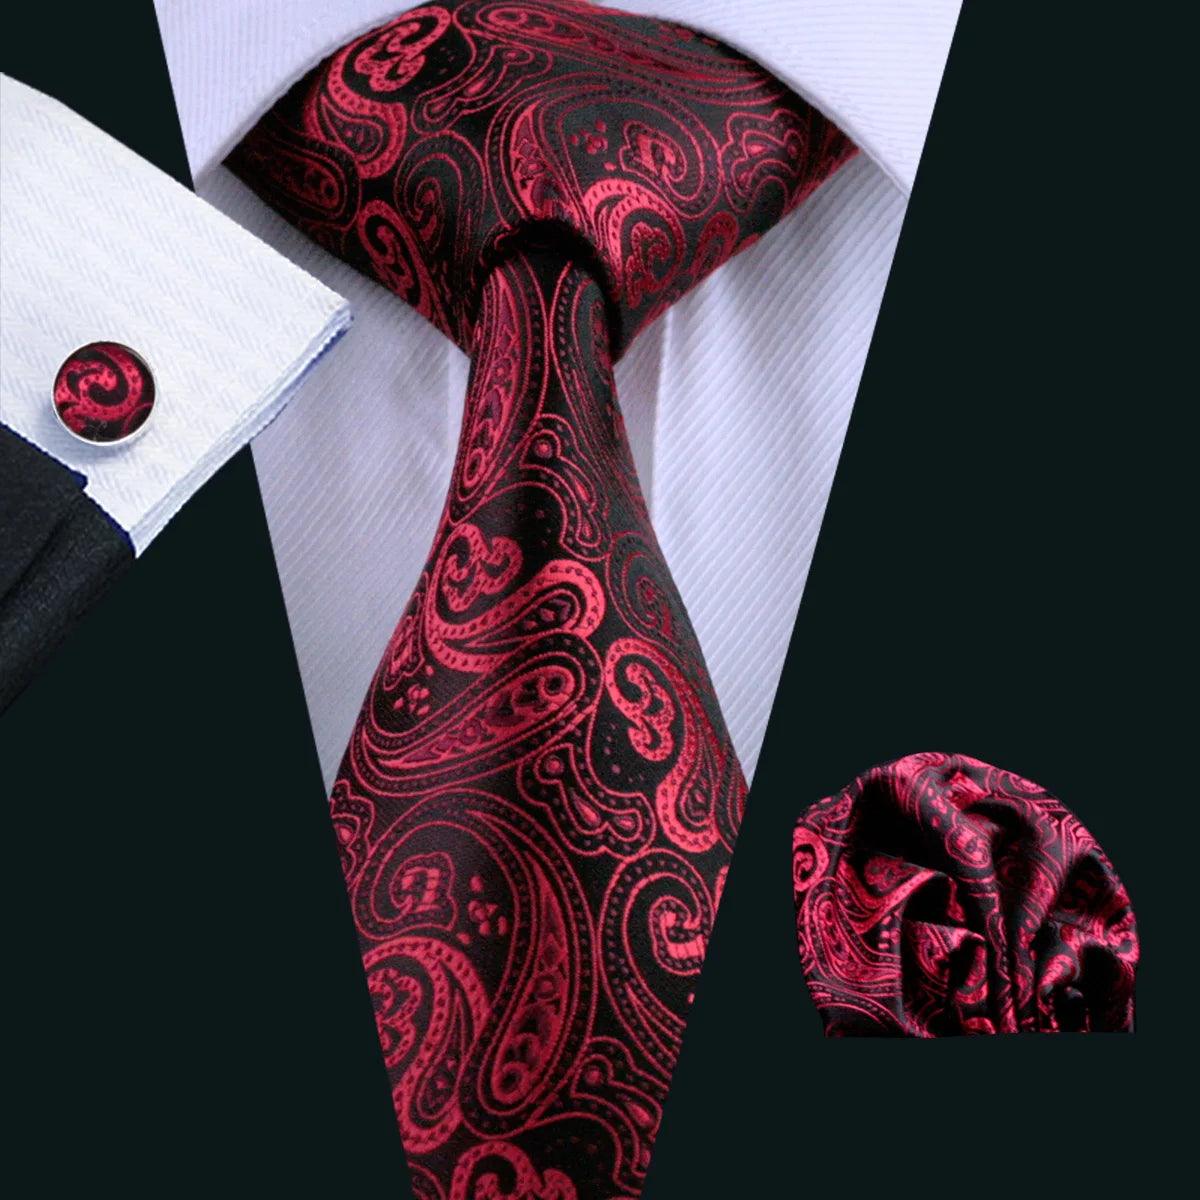 Men's Accessories - Ties Fashion Red Tie Sets 8.5Cm Silk Jacquard Neckties Wedding Business 43 Styles